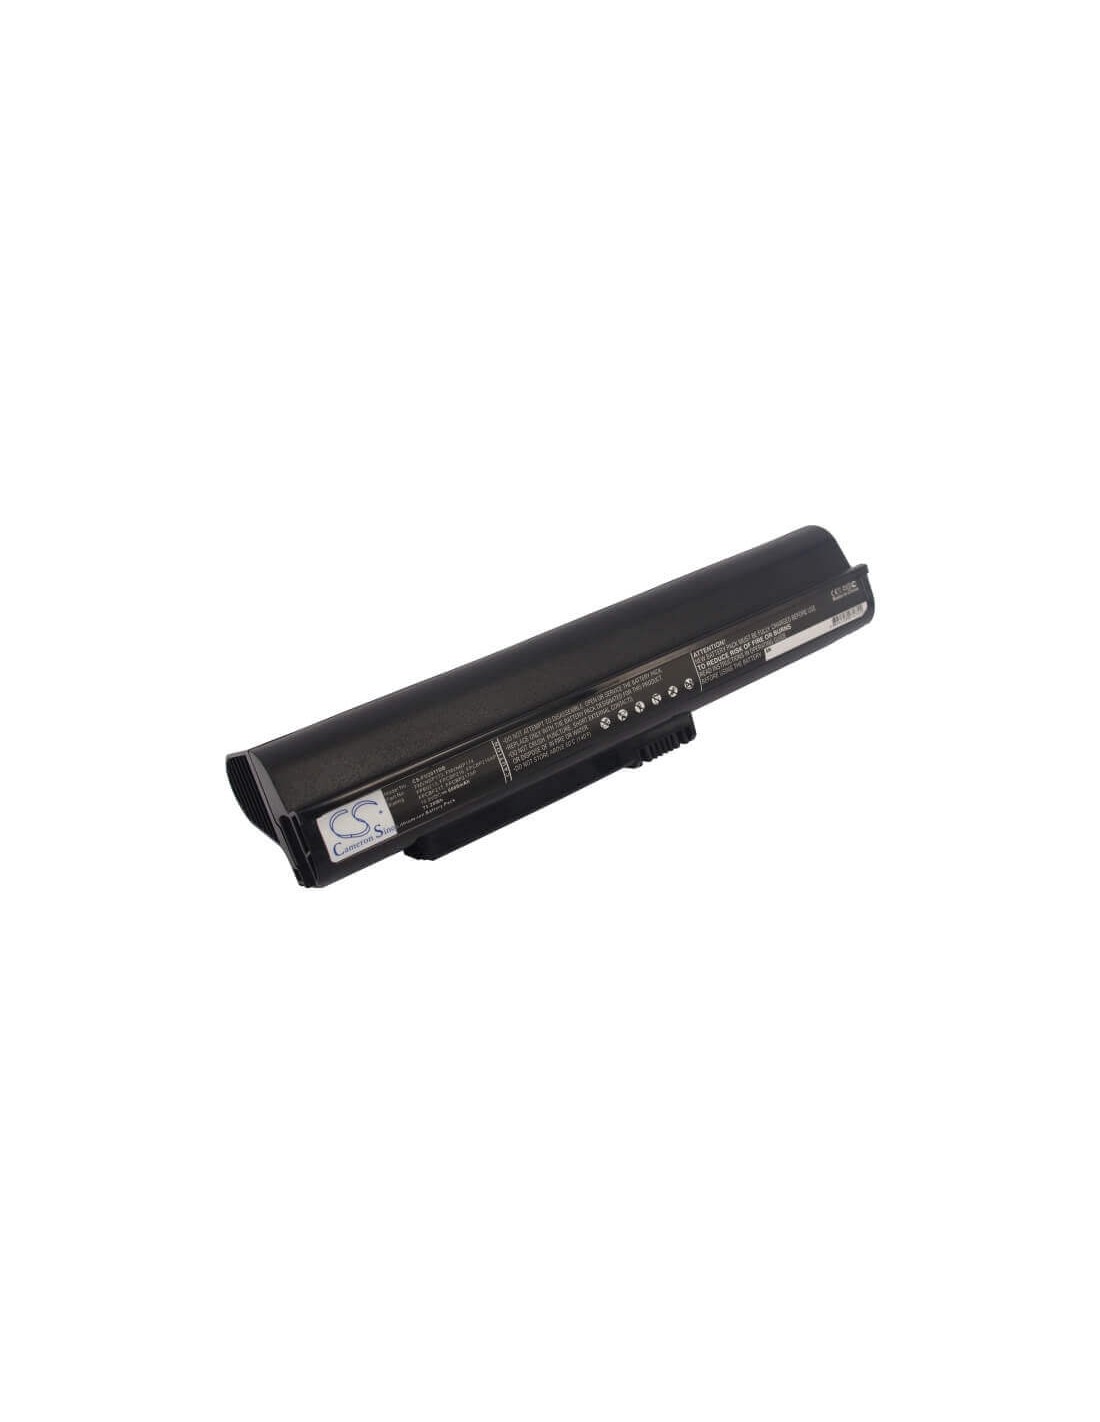 Black Battery for Fujistu Lifebook M2010, Lifebook M2011, Fmv-biblo Loox M/d10 10.8V, 6600mAh - 71.28Wh